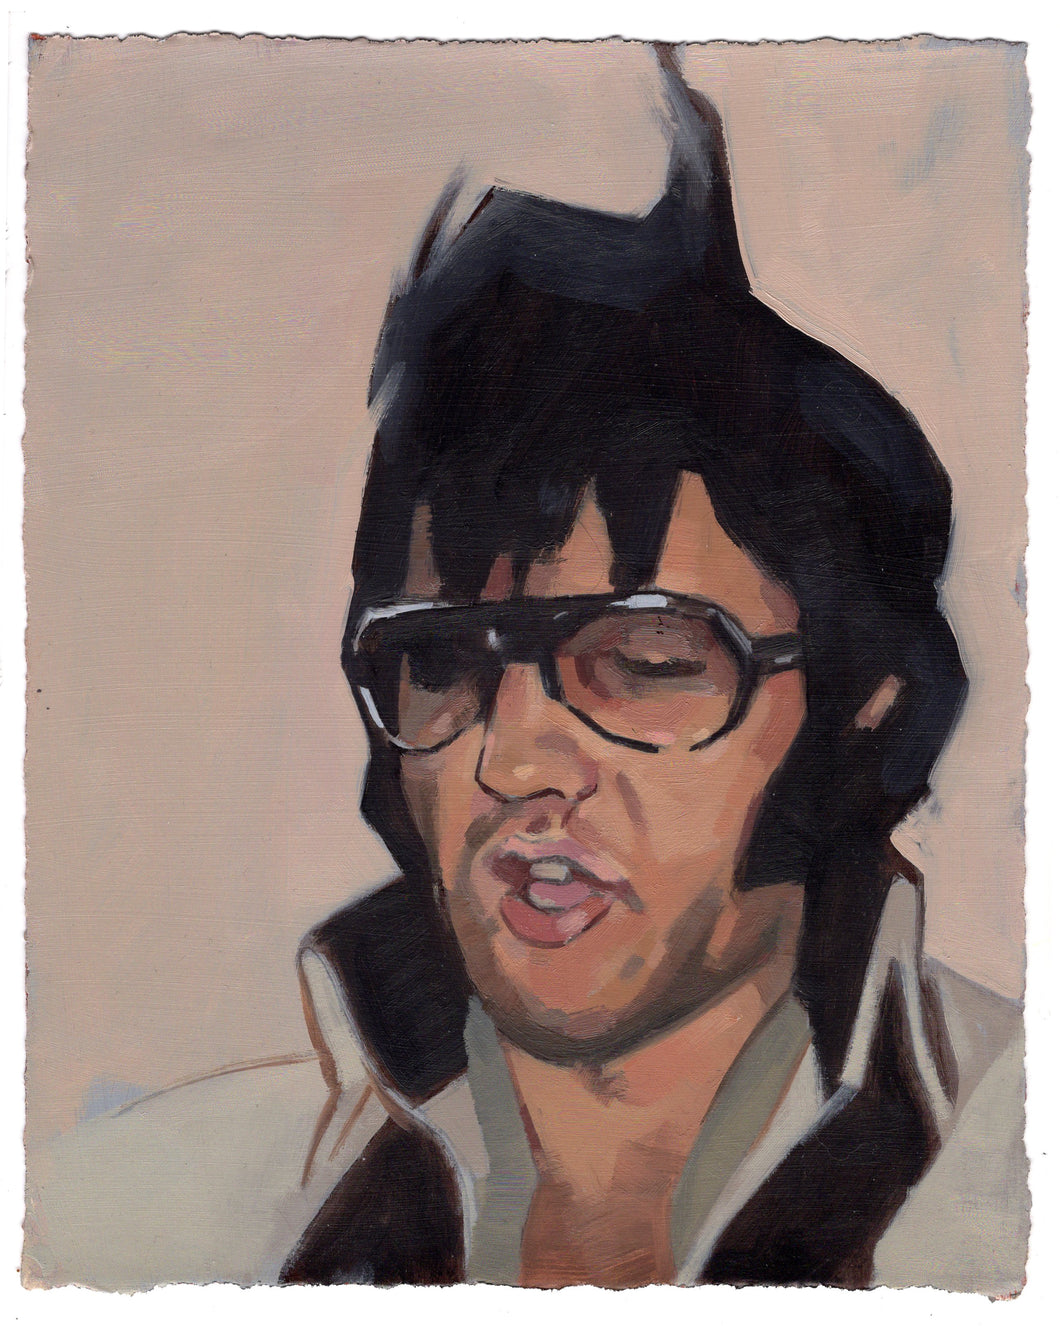 WWN Celebrity Portraits: The King v2.0 - Elvis Presley